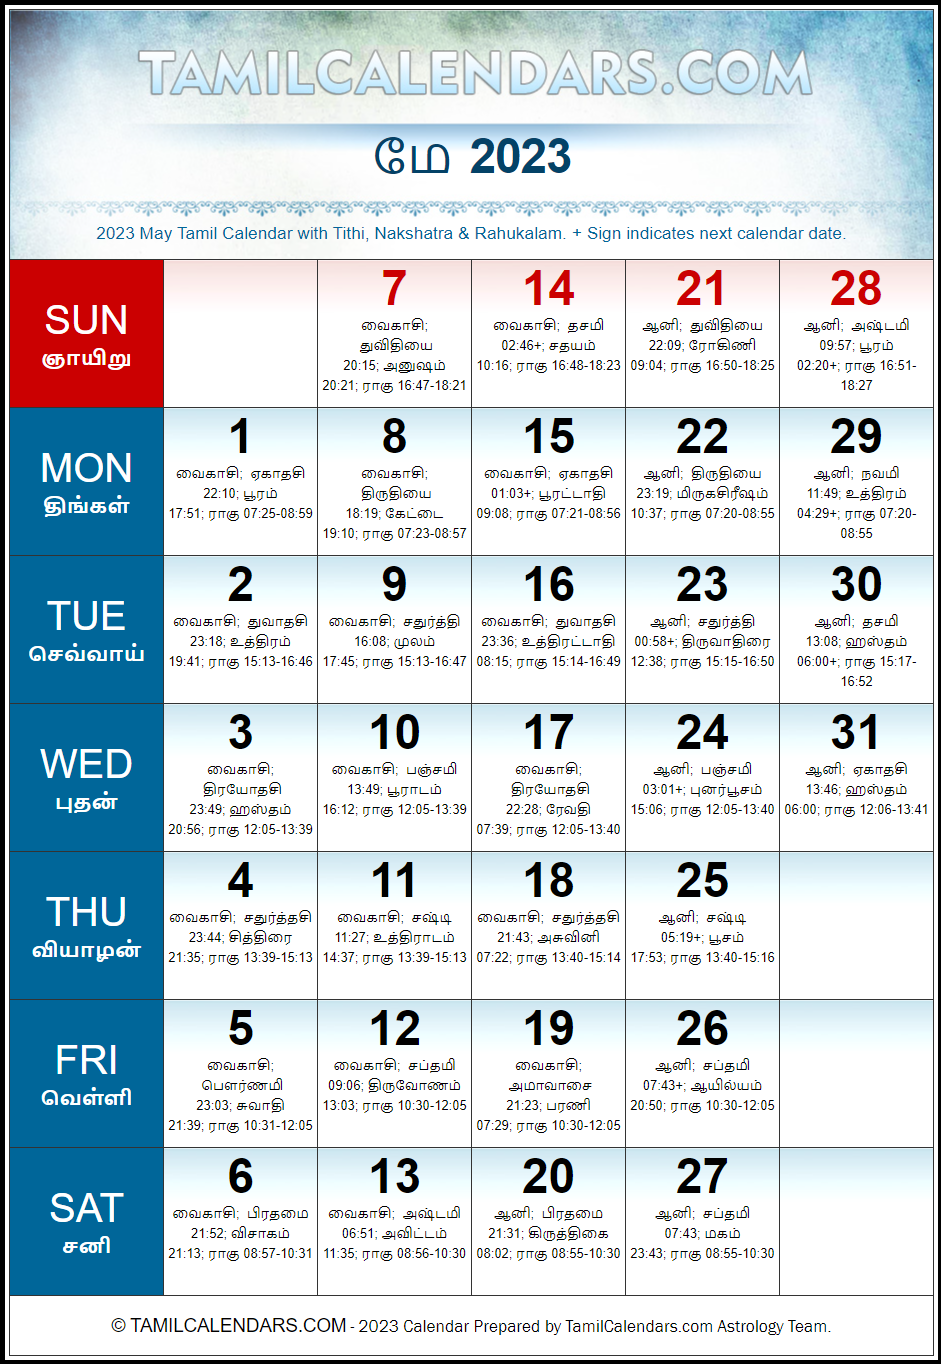 May 2023 Tamil Calendar